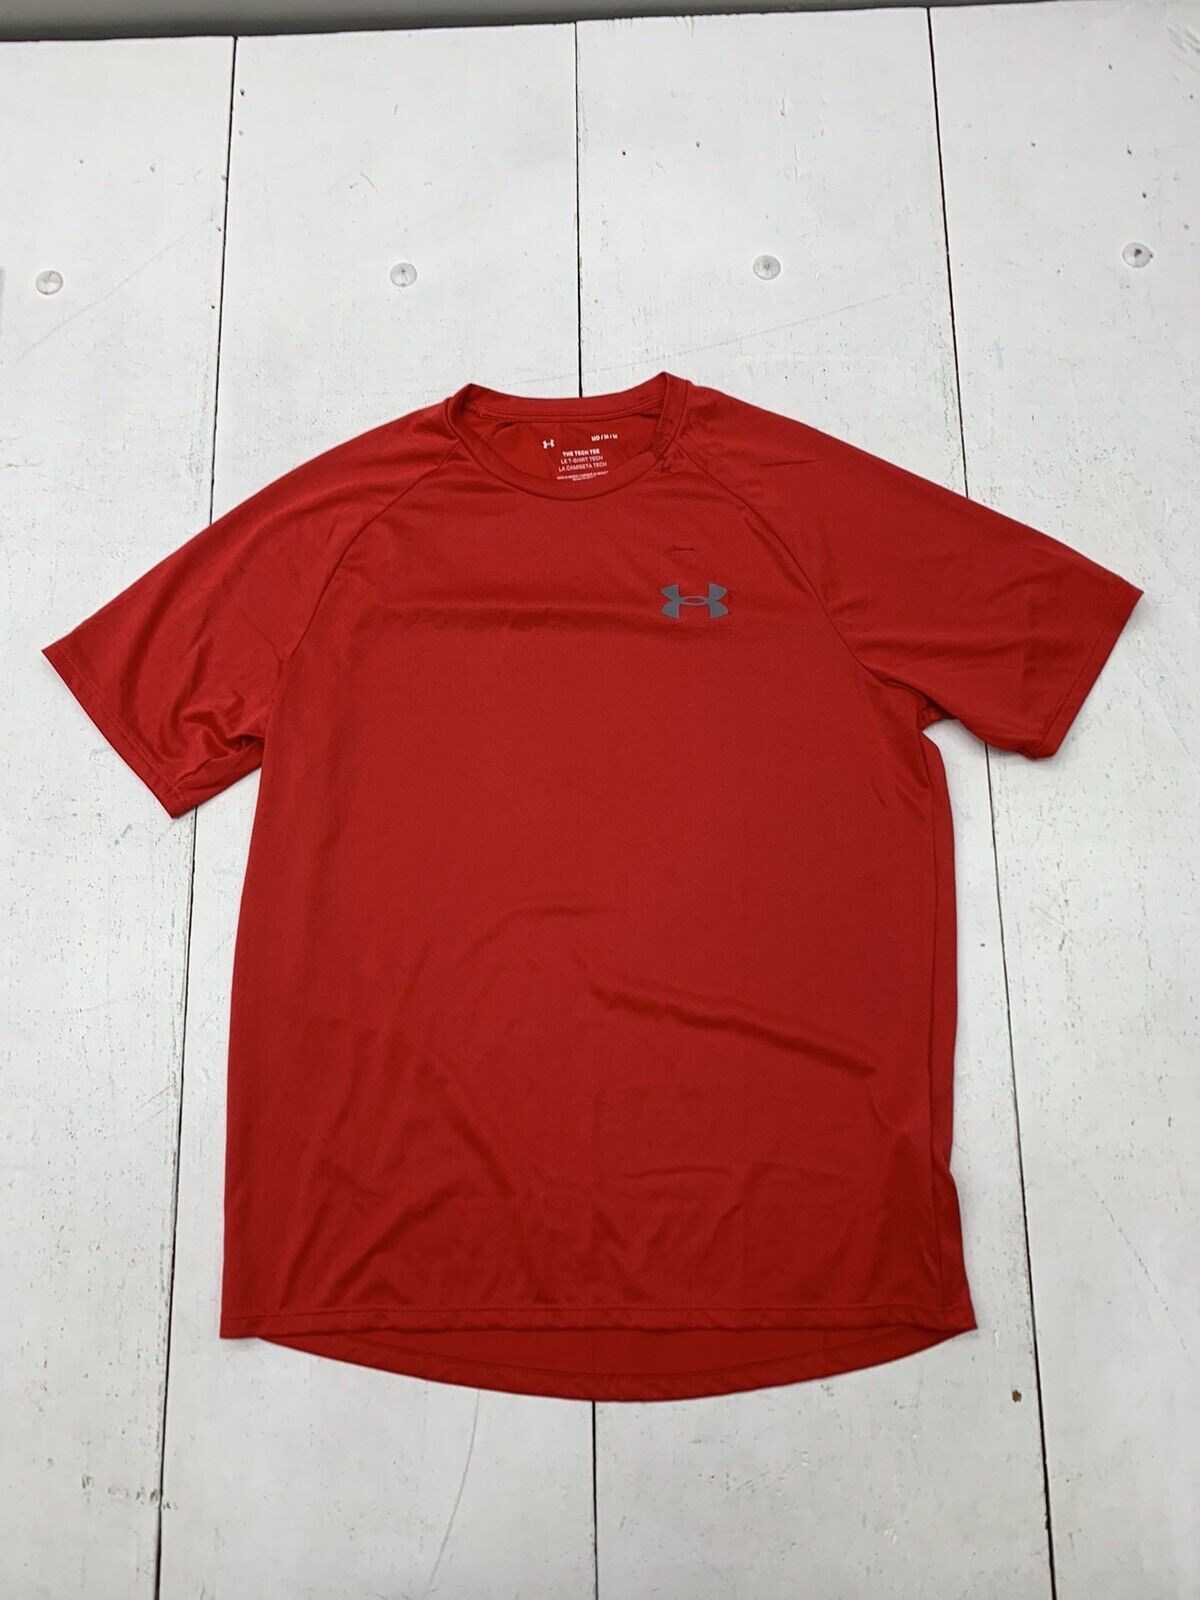 Under Armour Mens Red Athletic Short Sleeve Shirt Size Medium - beyond  exchange